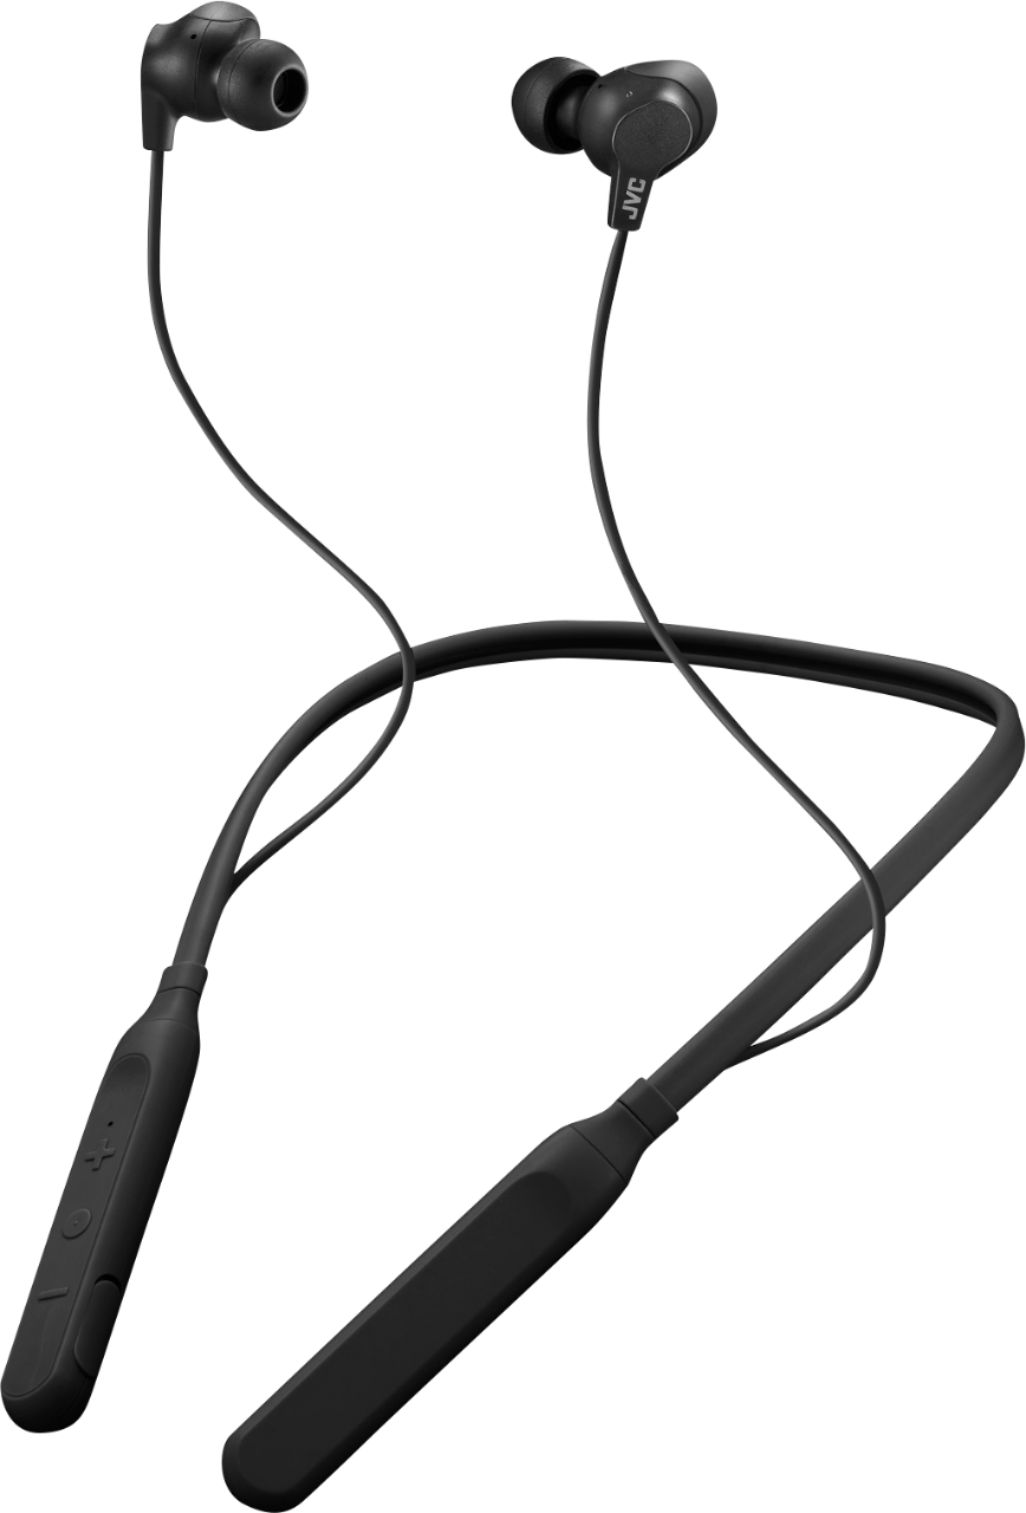 4x Ear bud tips Earbuds For JVC Xtreme Xplosives In-ear Earbud Headphones Series 